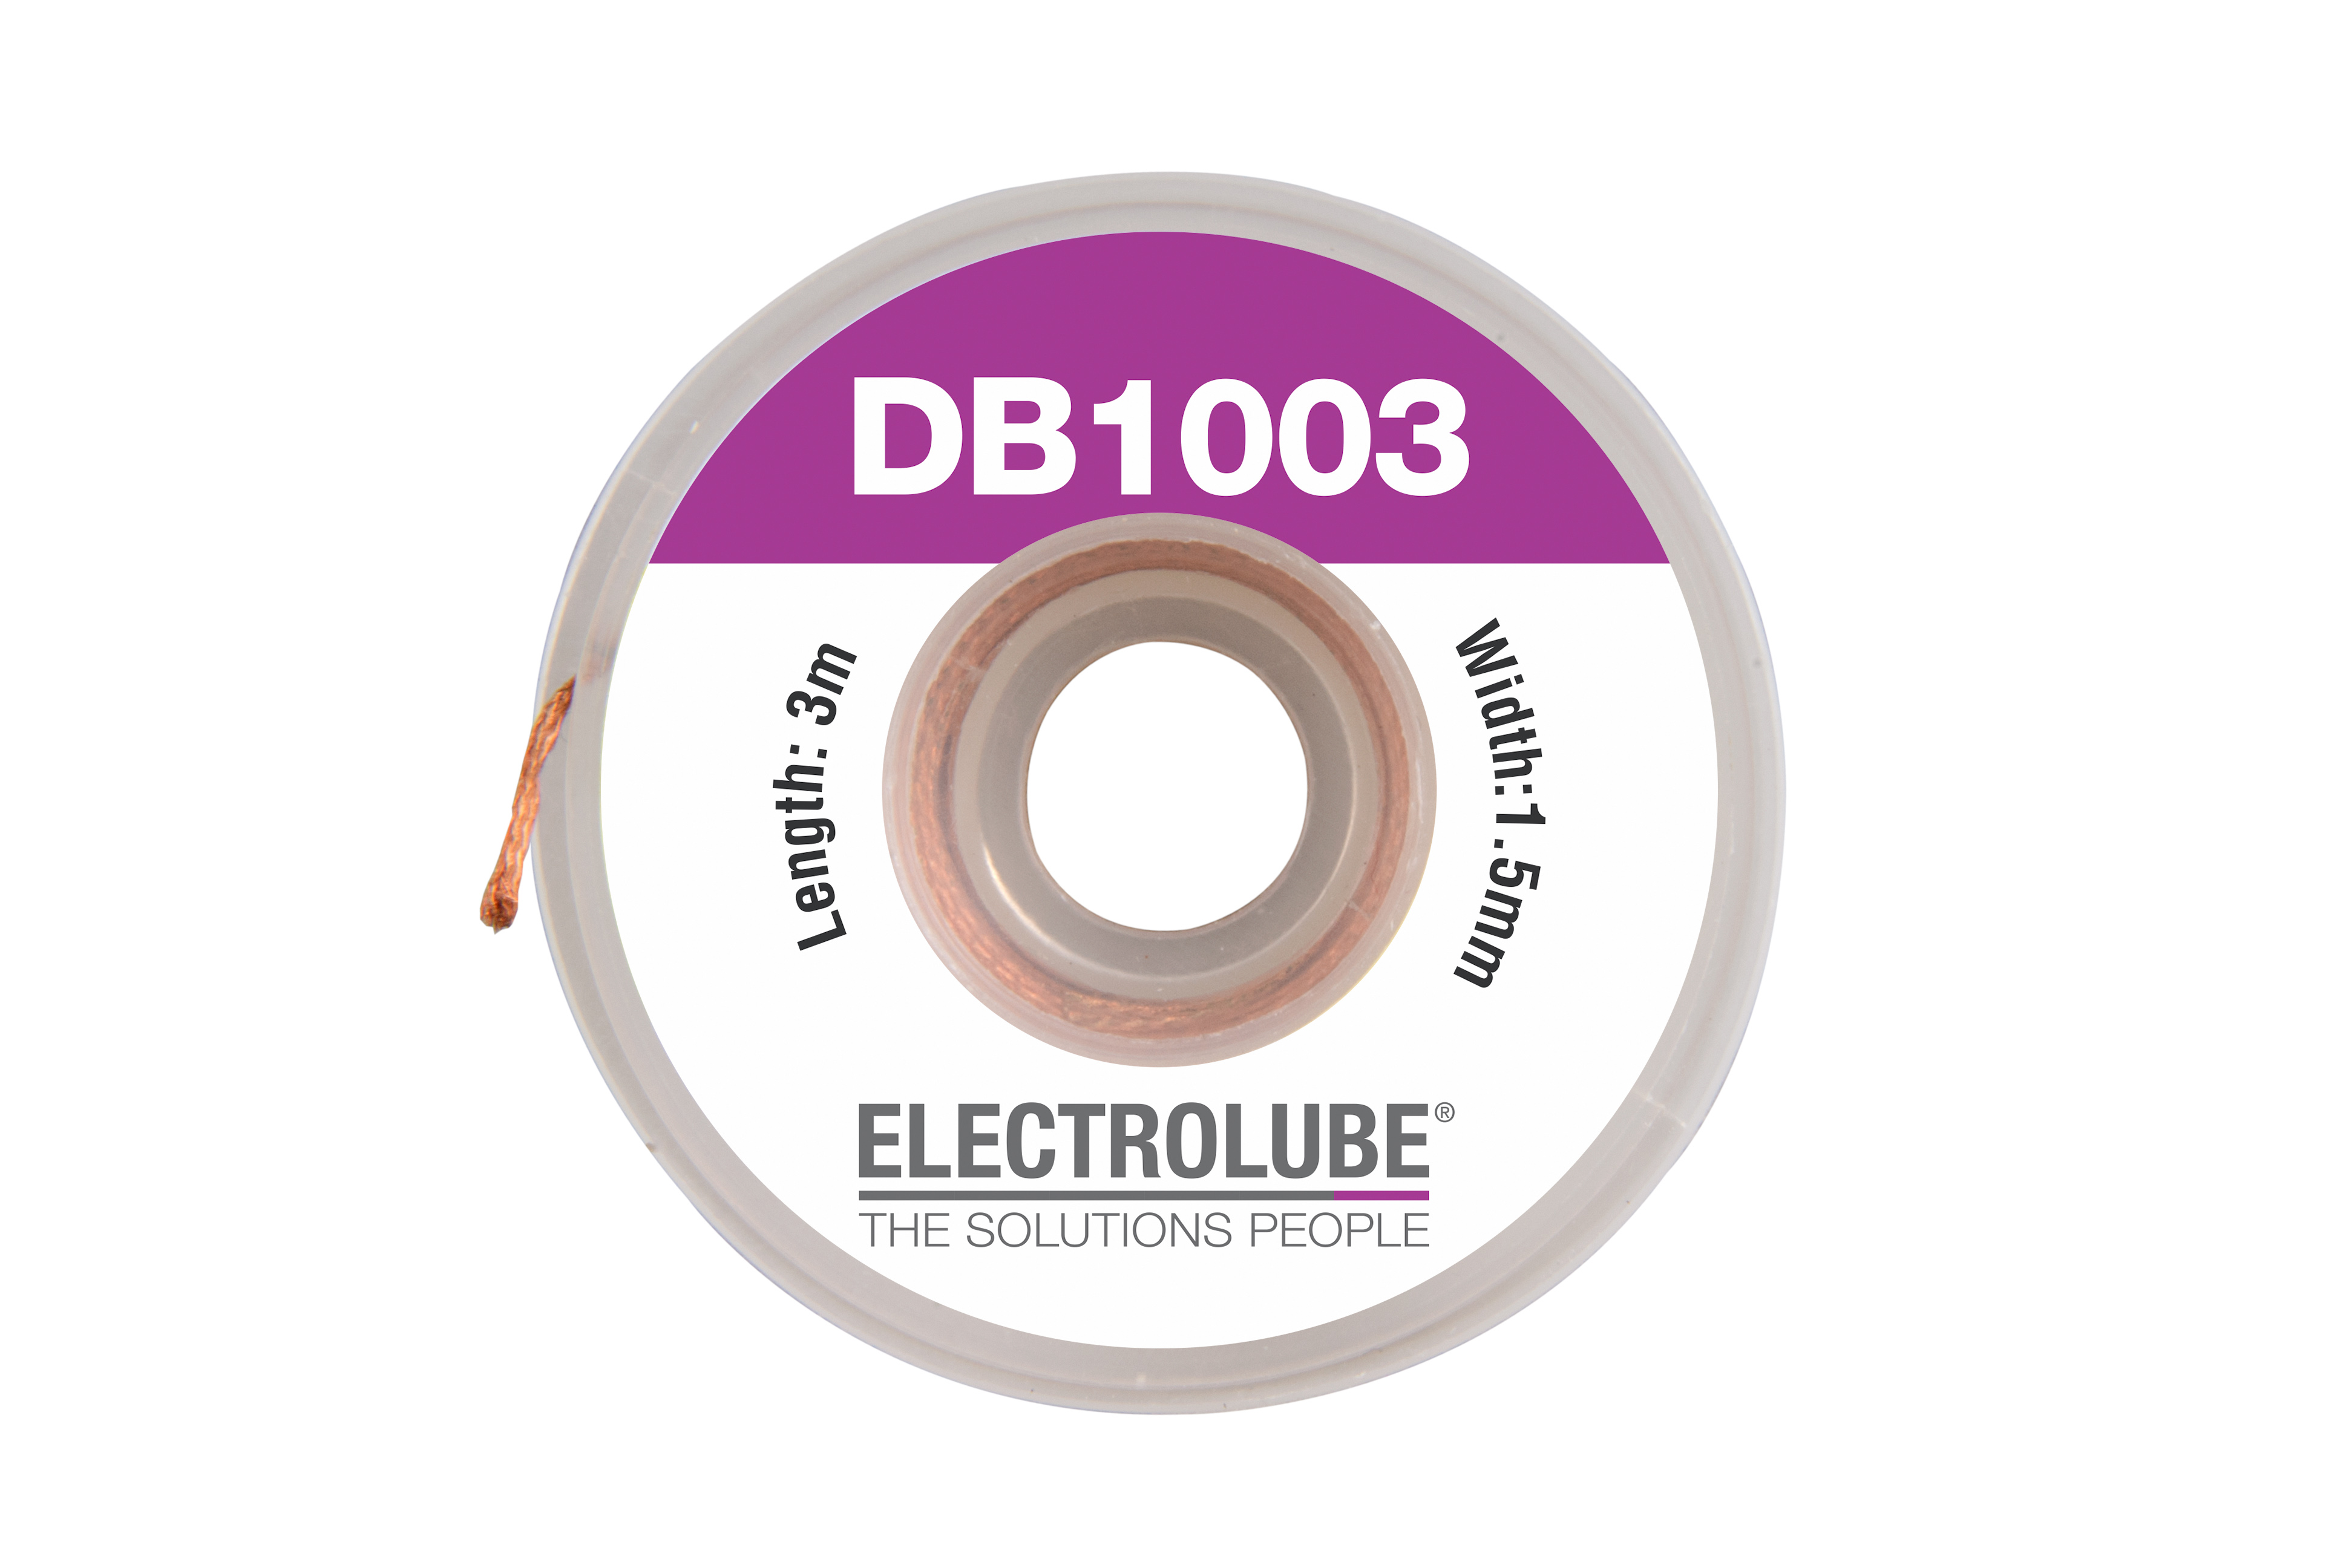 DB1003 Electrolube